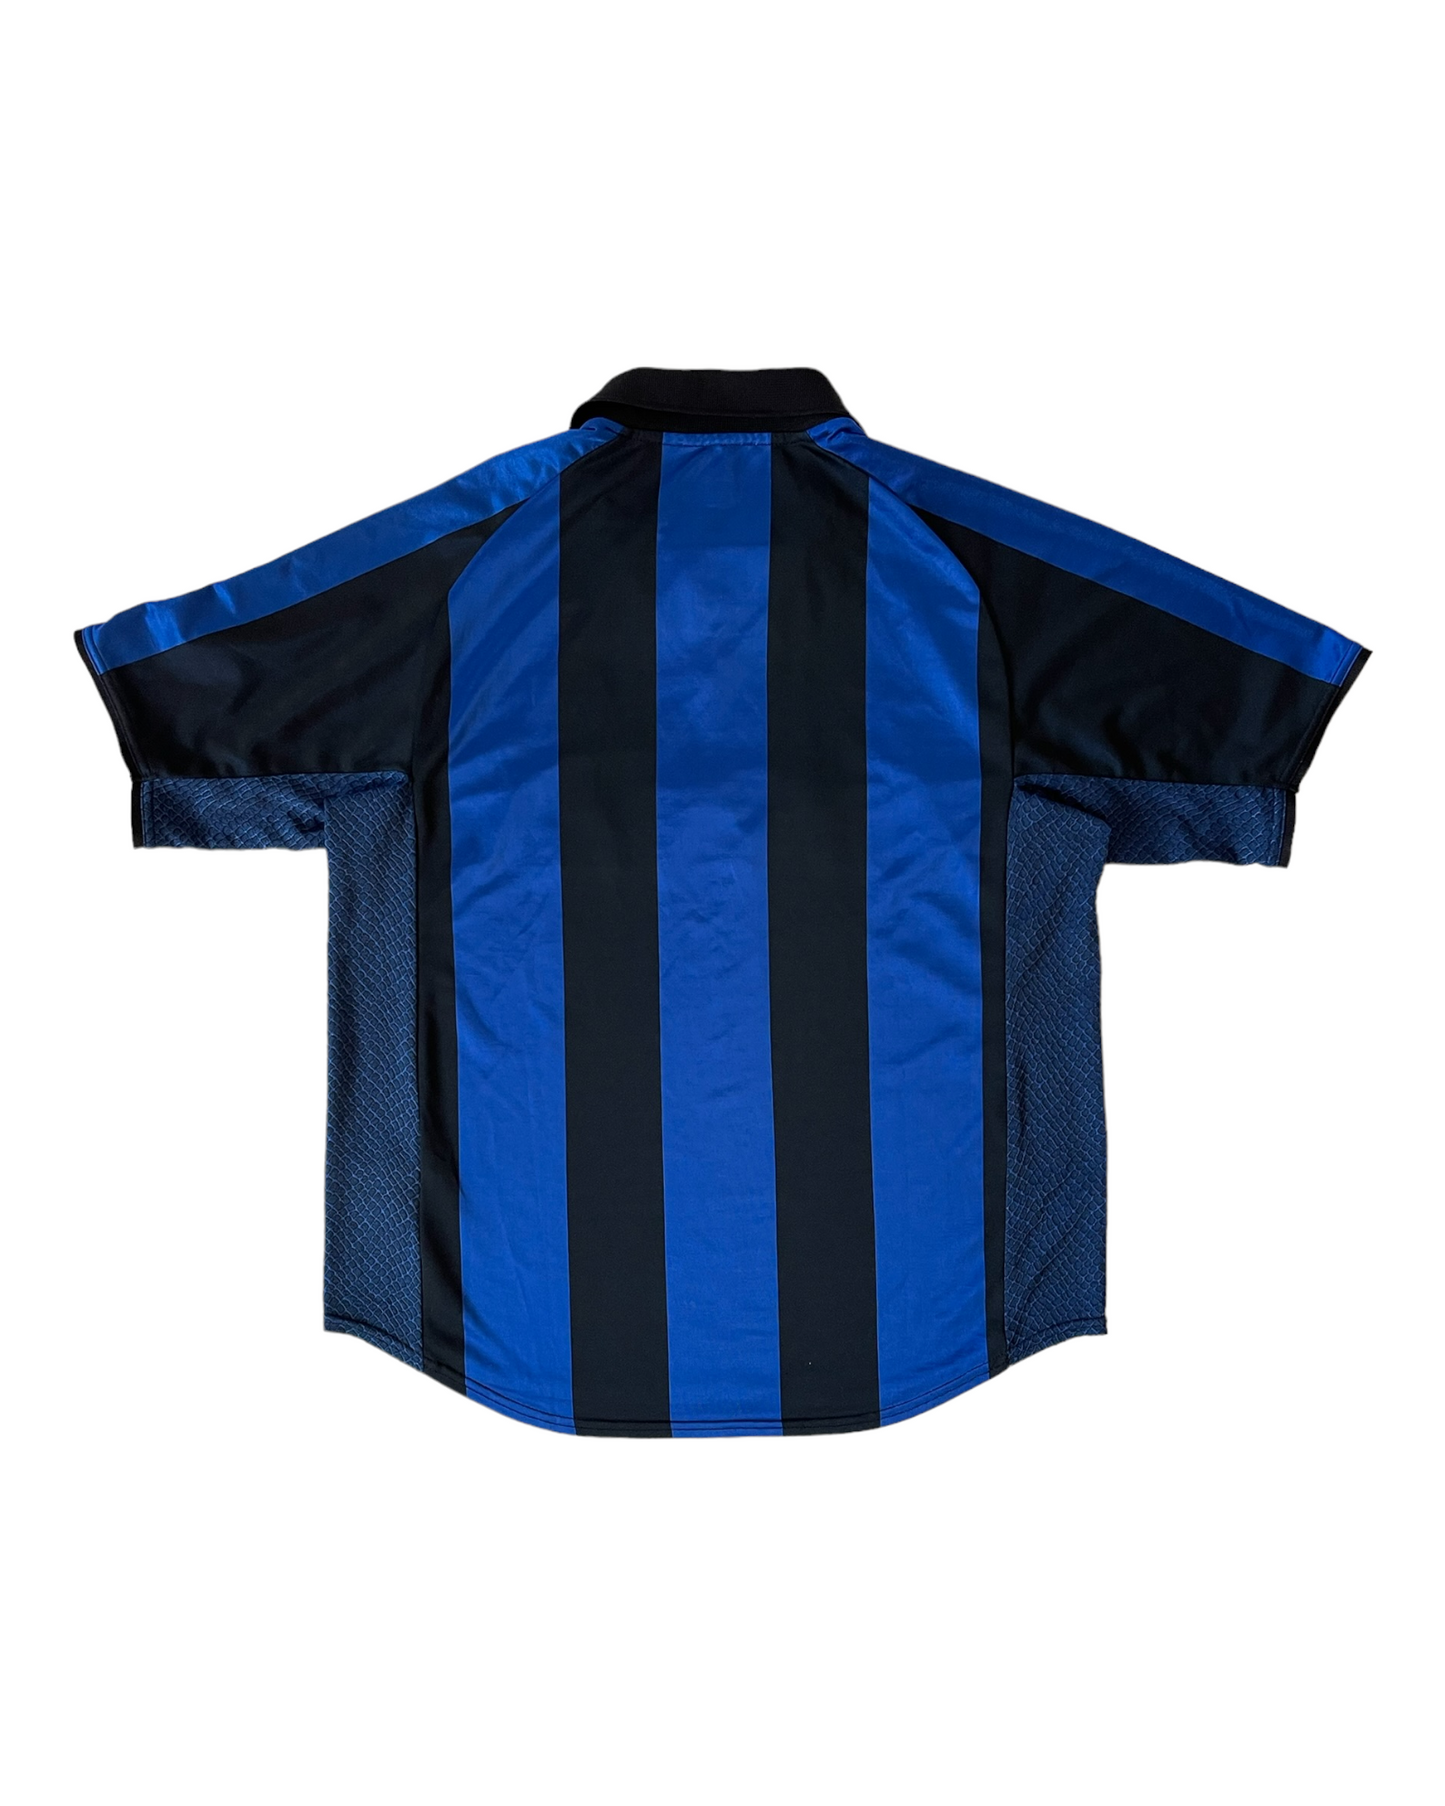 Internazionale Milano Nike 2001 - 2002 Home Football Shirt Size L Pirelli Made in UK Blue Black Dri Fit